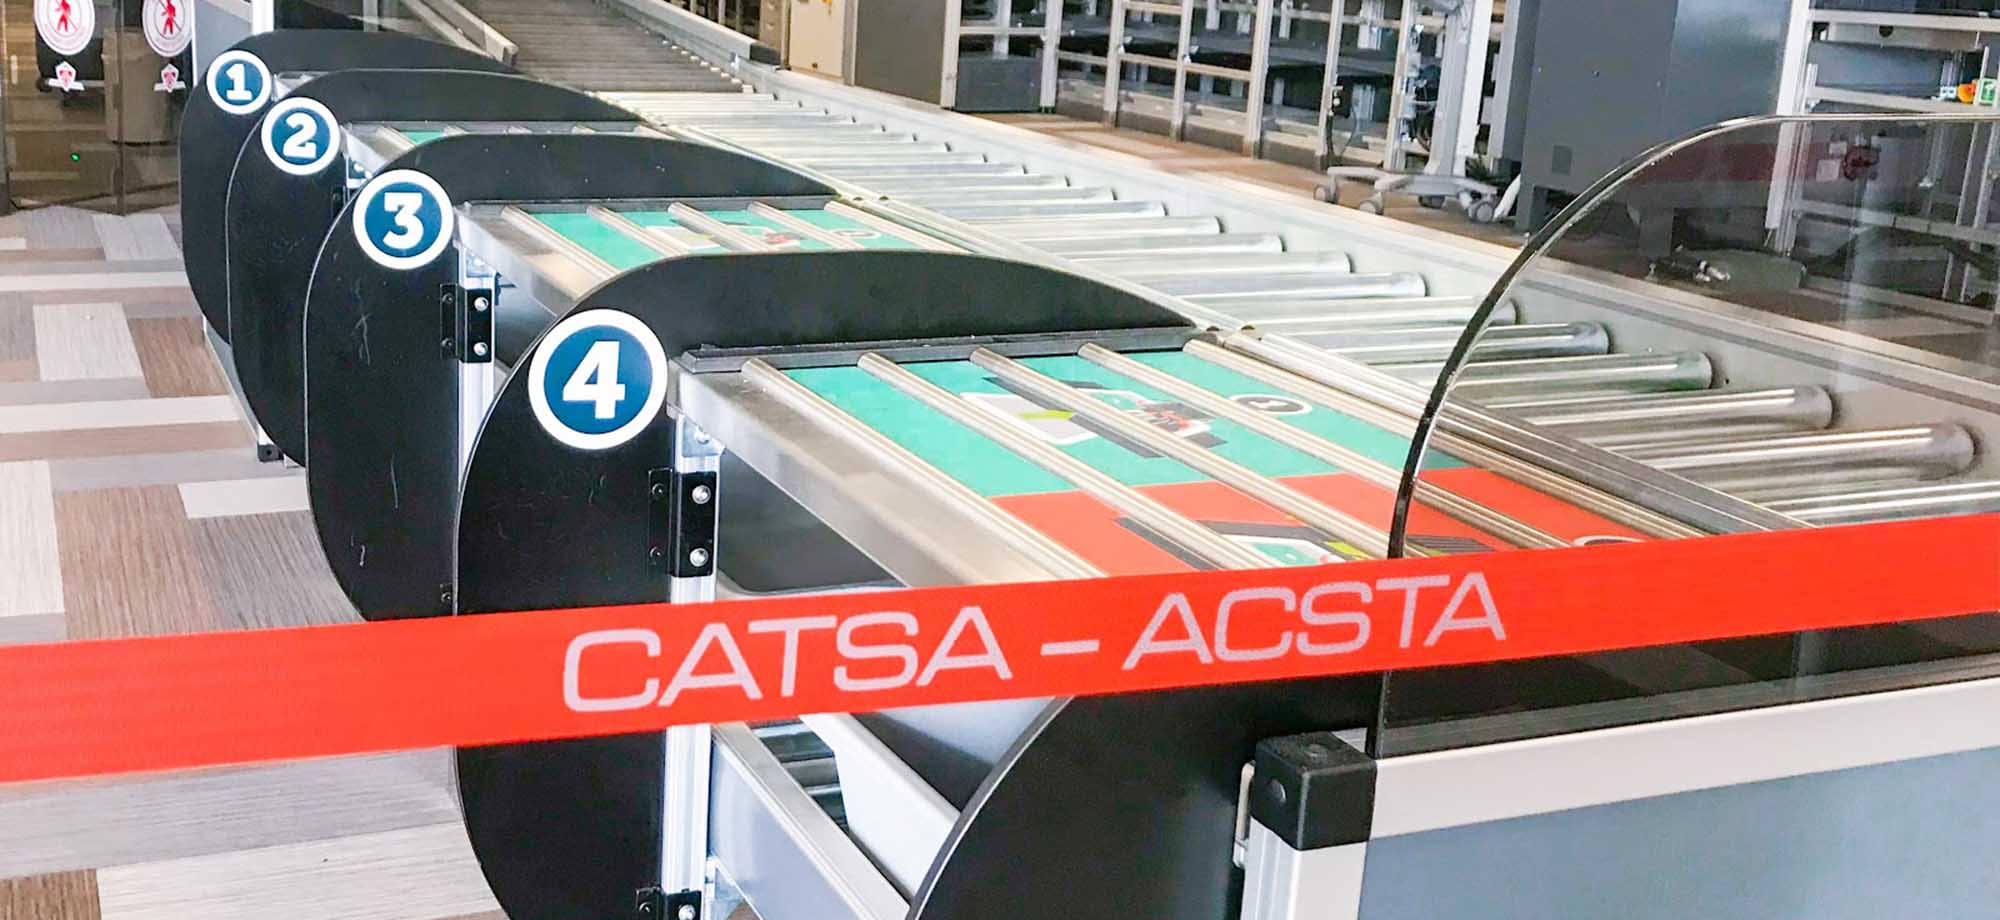 New CATSA Pre-Board Security Screening Area